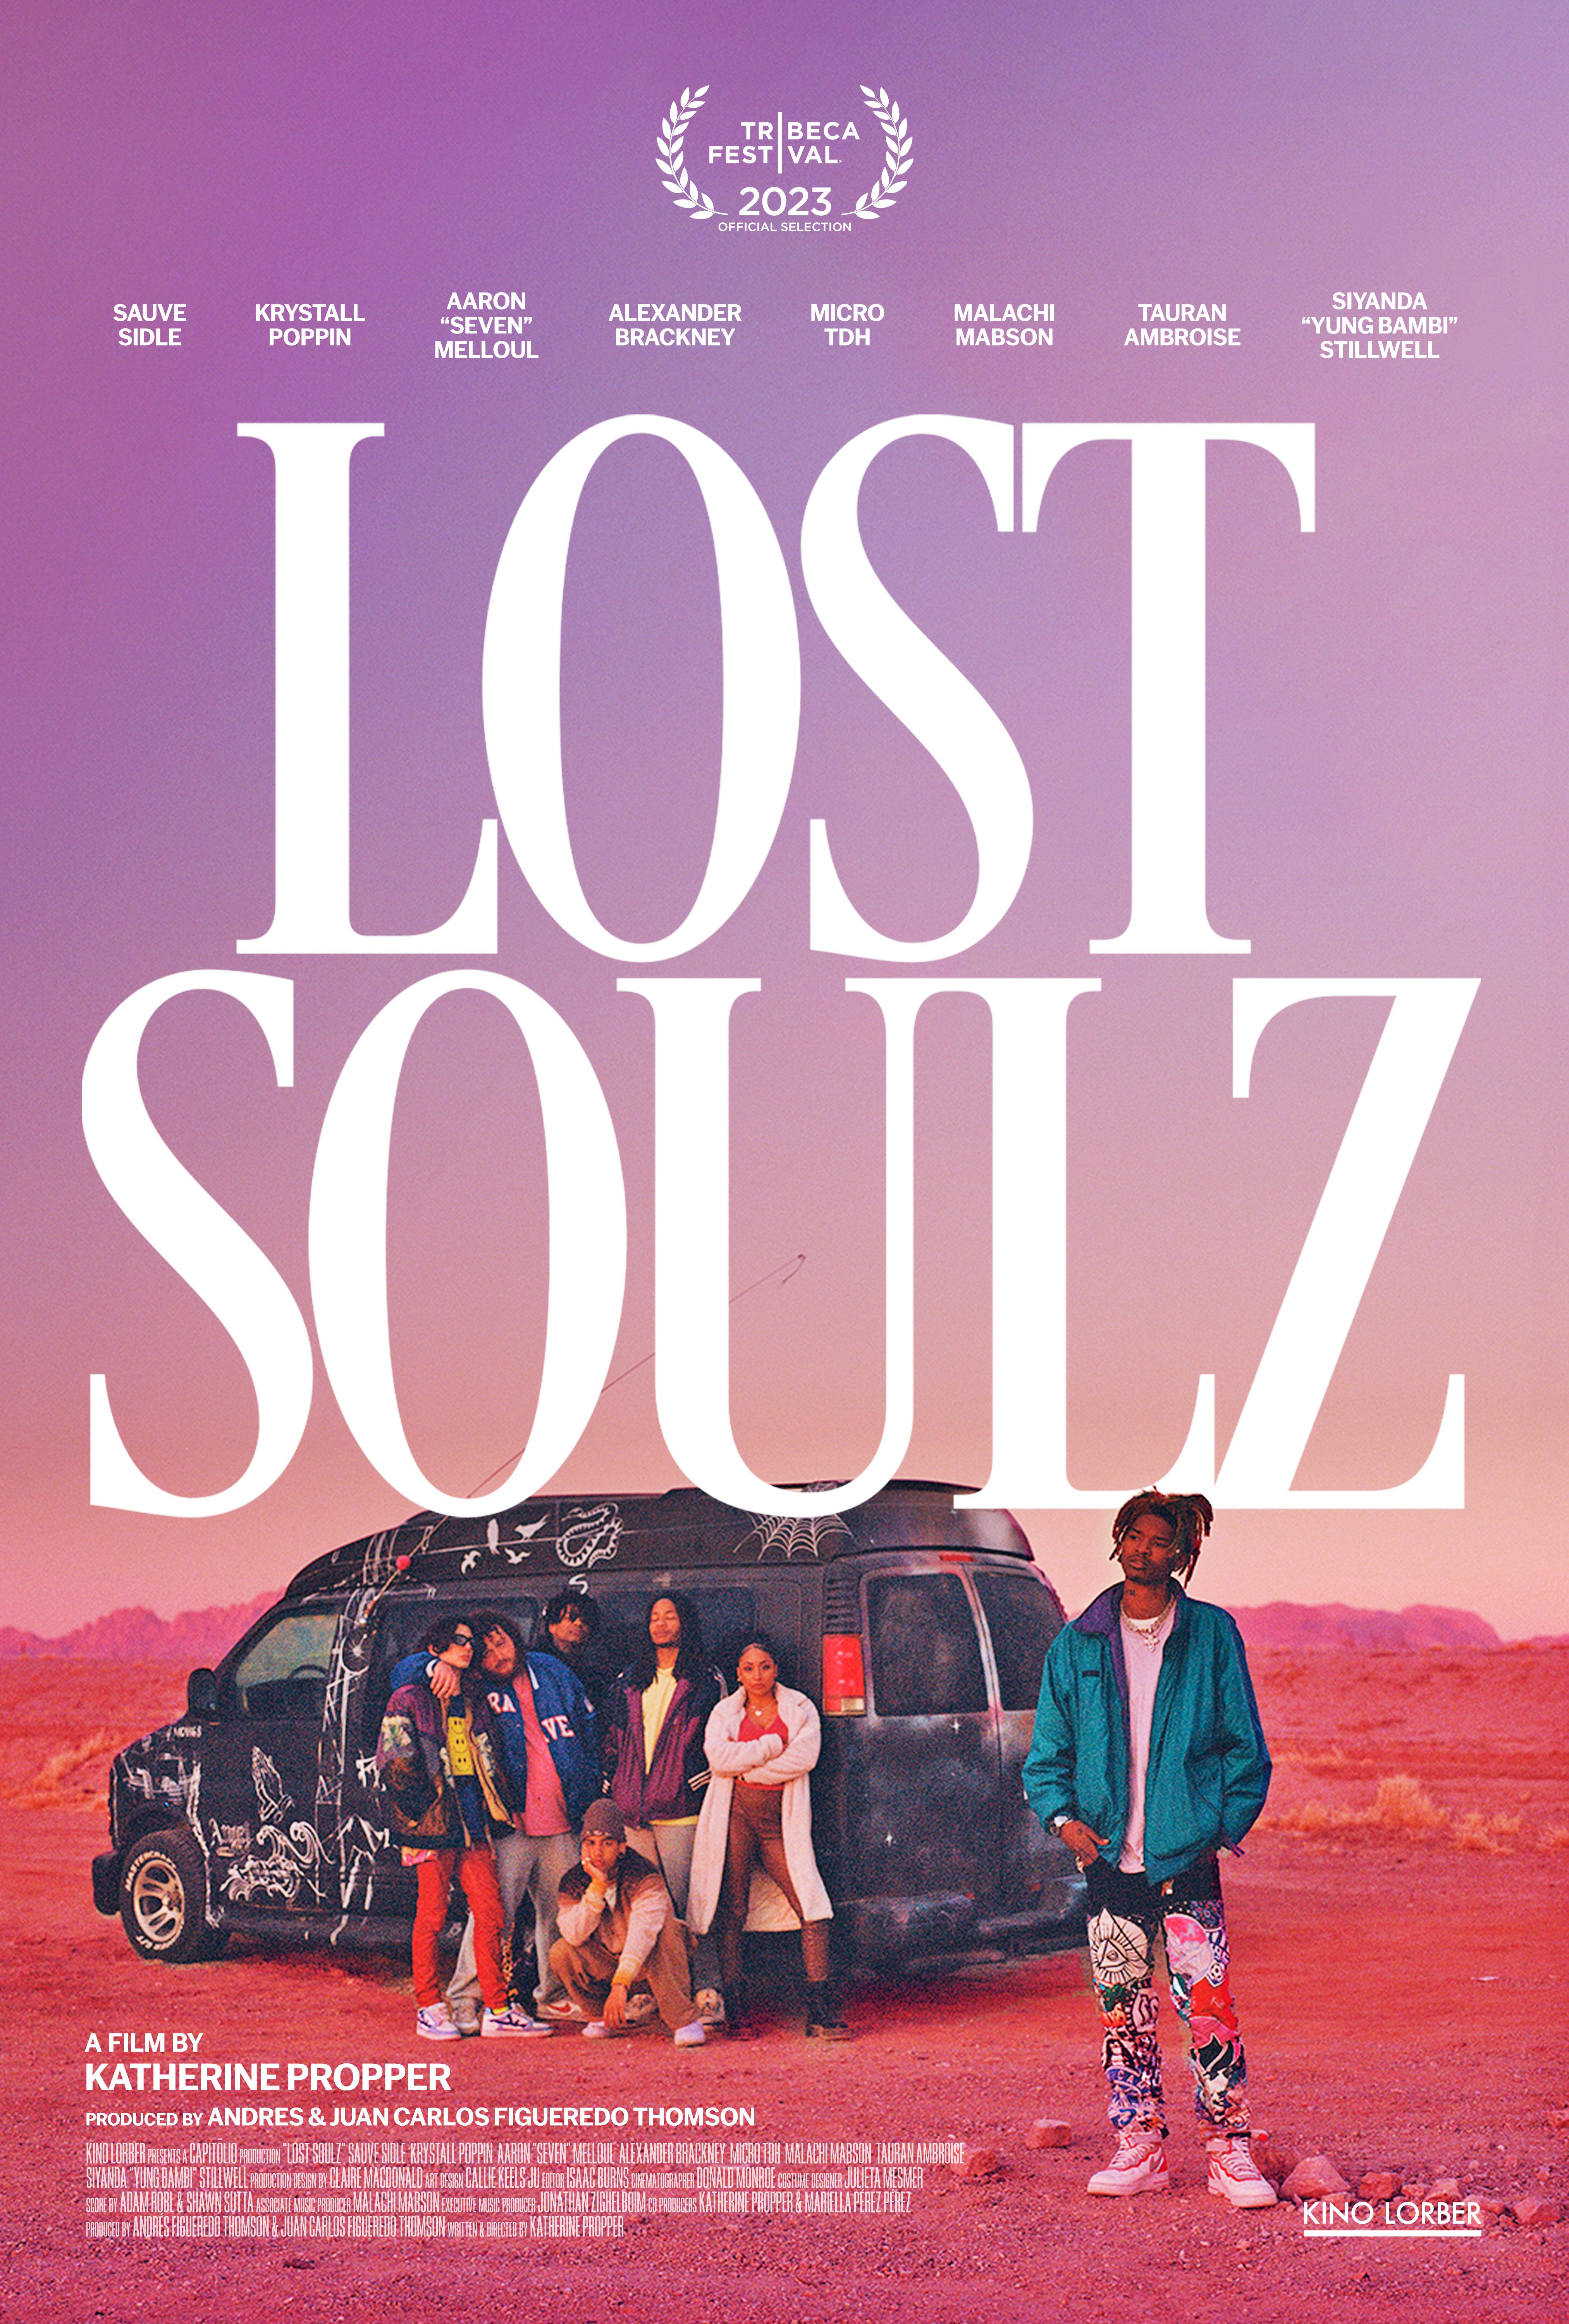 Lost Soulz (2023)